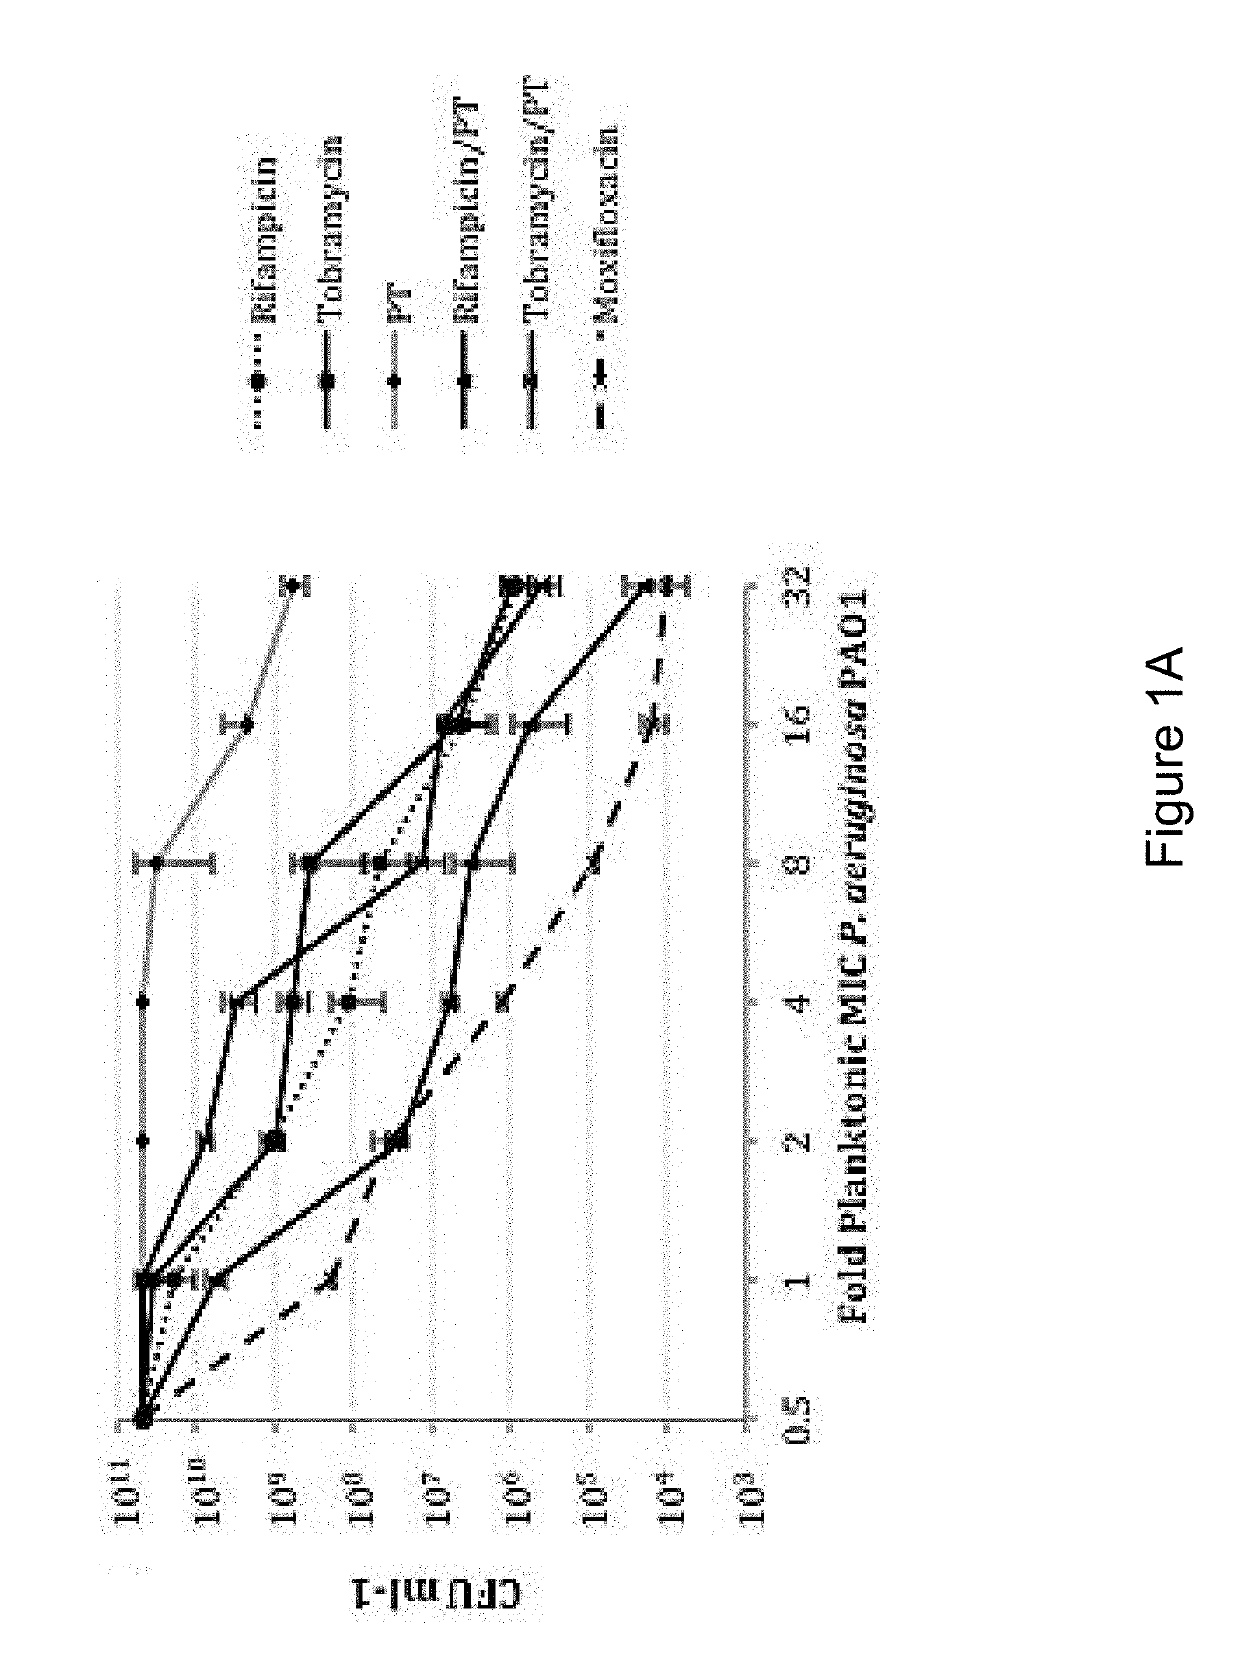 Pharmaceutical Composition Containing Polymyxin B/Trimethoprim based Therapeutics